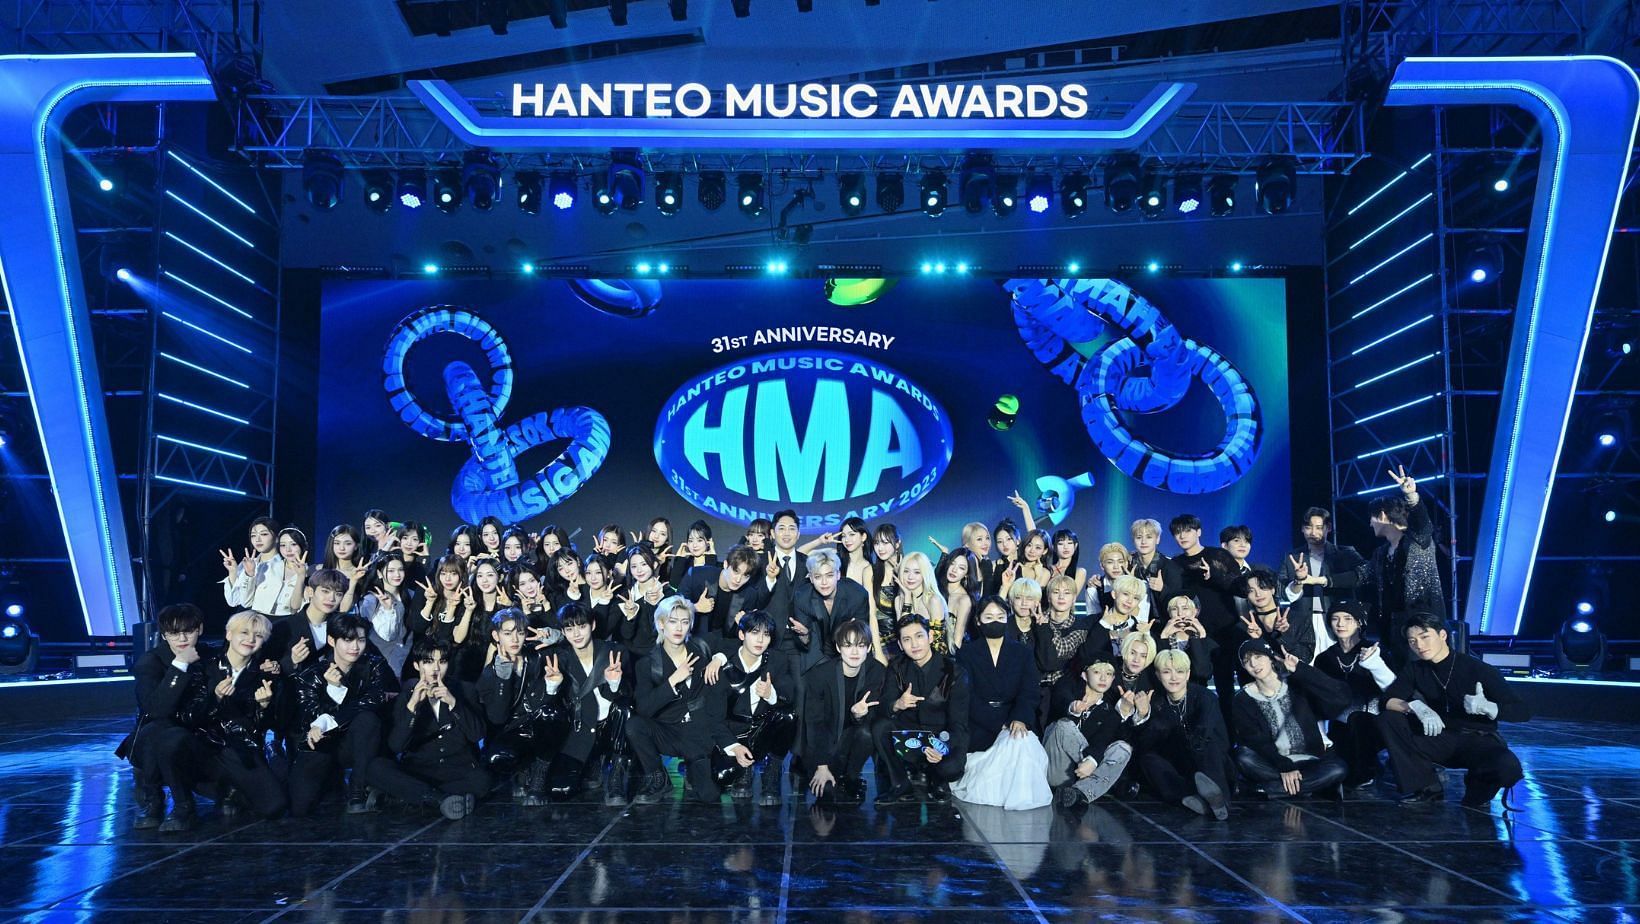 Internet reacts as horrible incidents take place during the 31st Hanteo Music Awards. (Images via X/@Hanteo_HMAs)